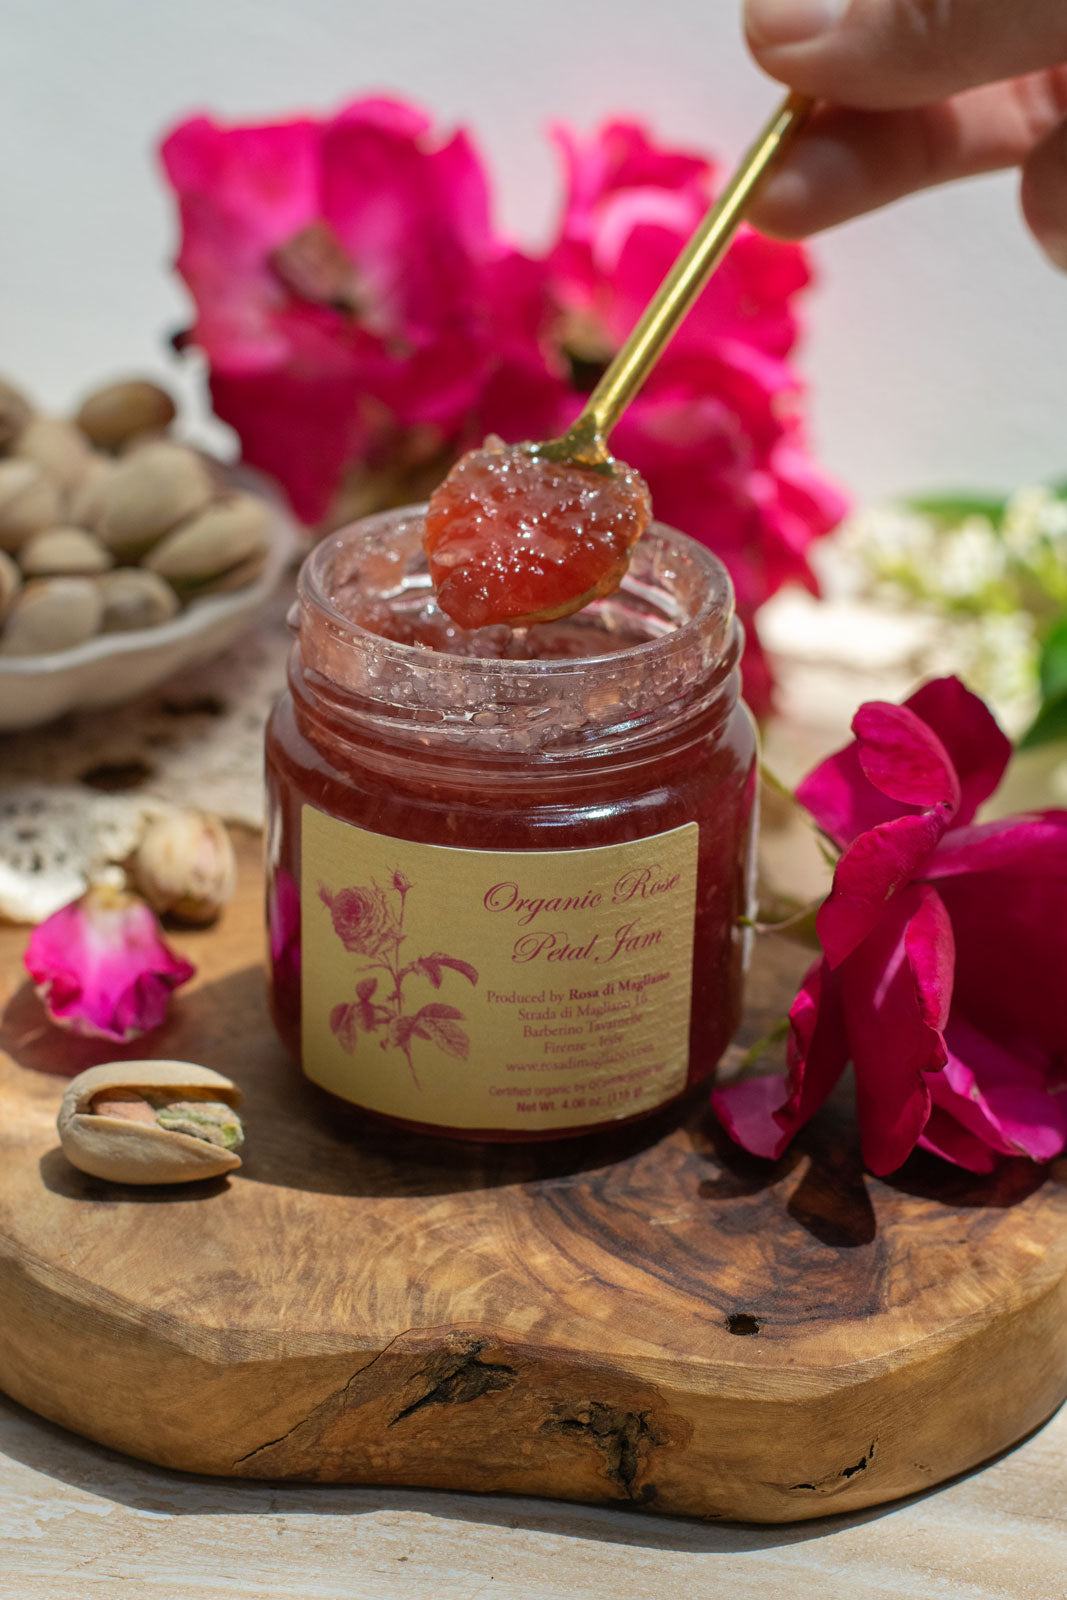 Magliano Rose Petal Jam Preserve, Certified Organic